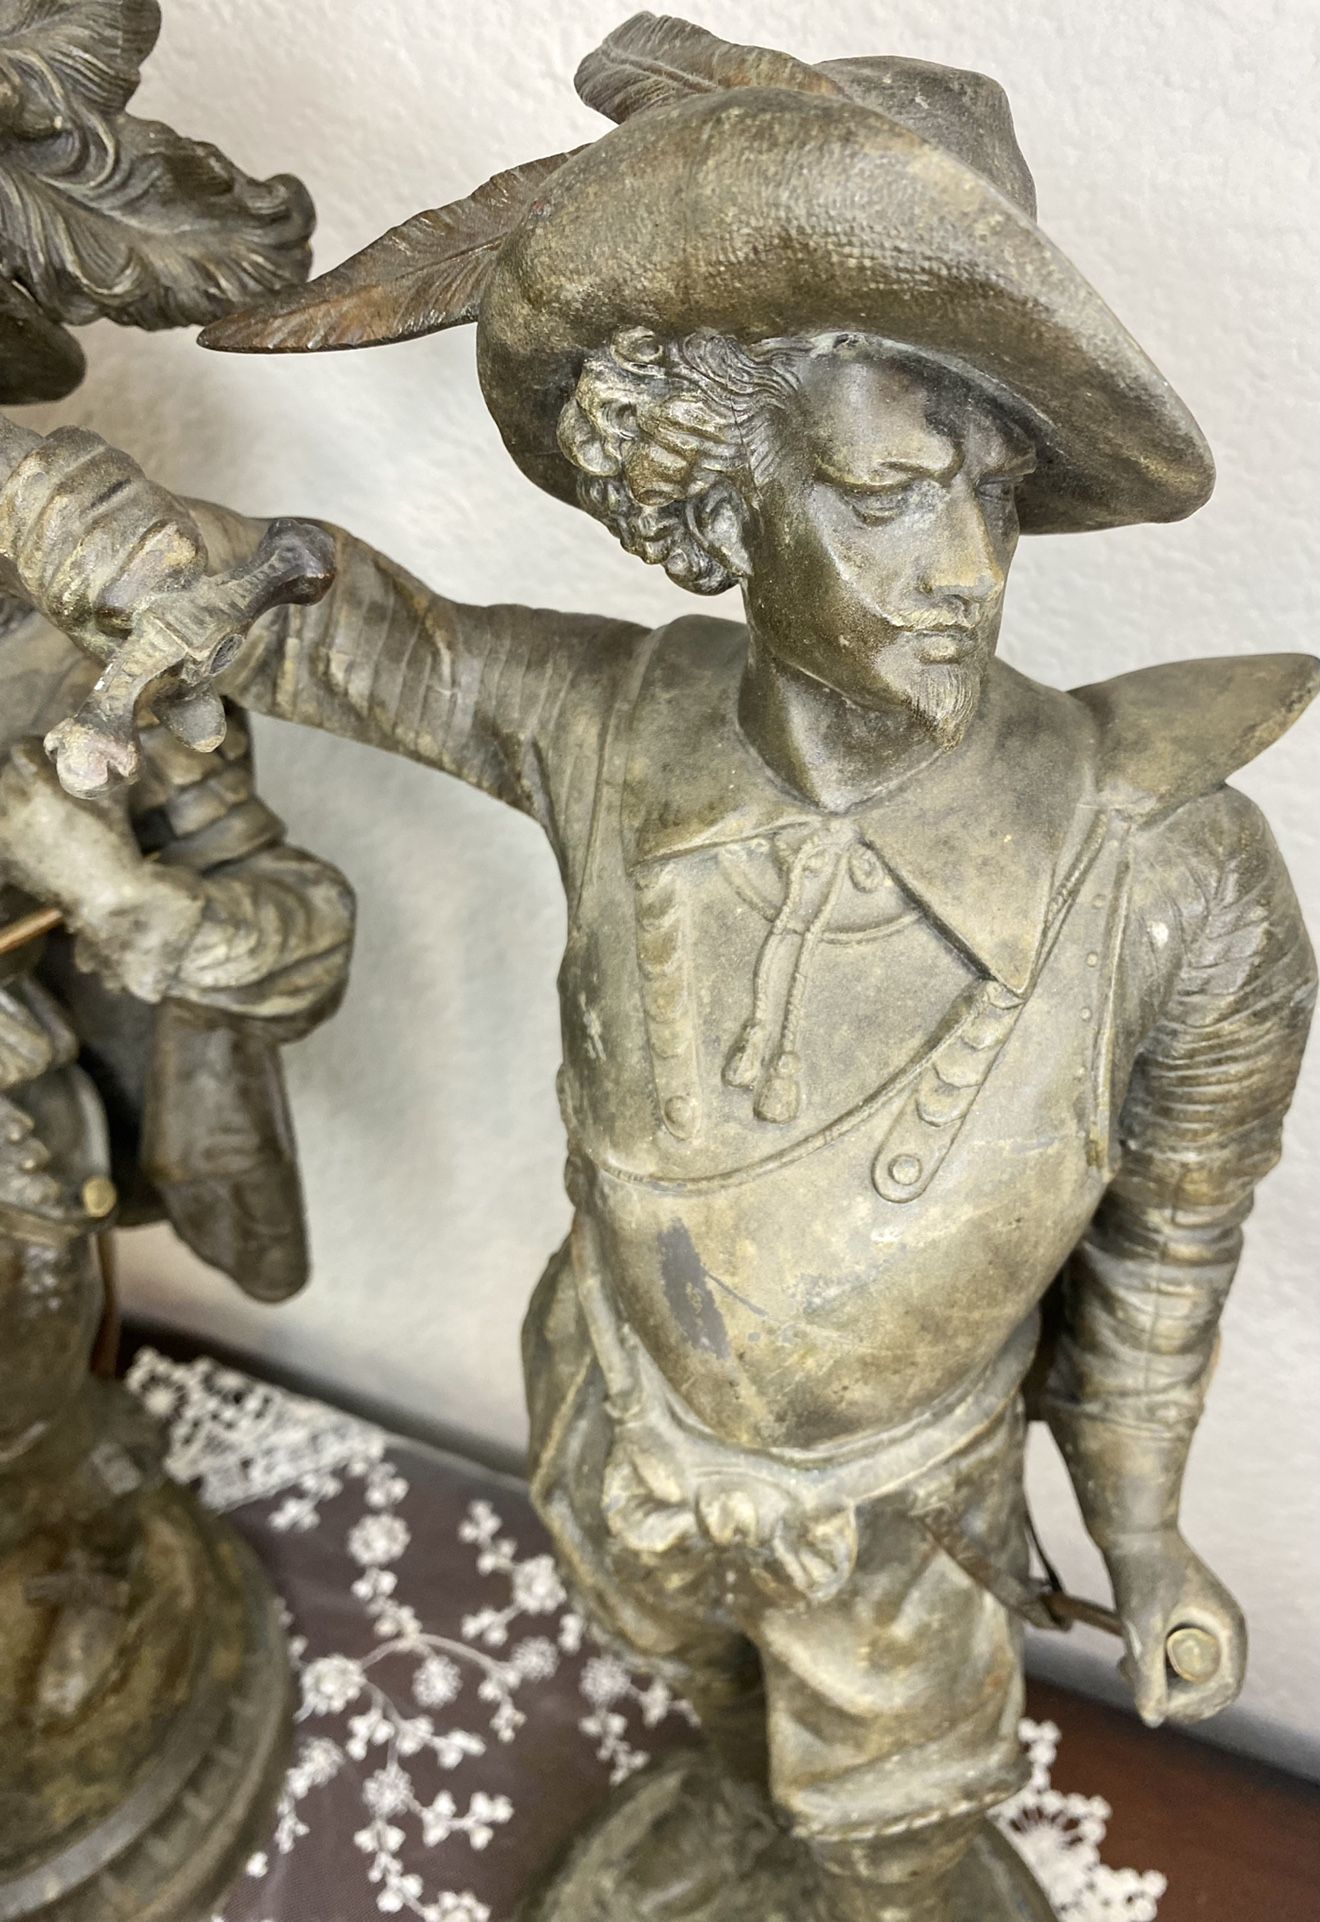 Antique 1800’s Century Don Juan & Don CaesarBronze Metal Statues 19.1/2” Tall Musketeers Sculptures.